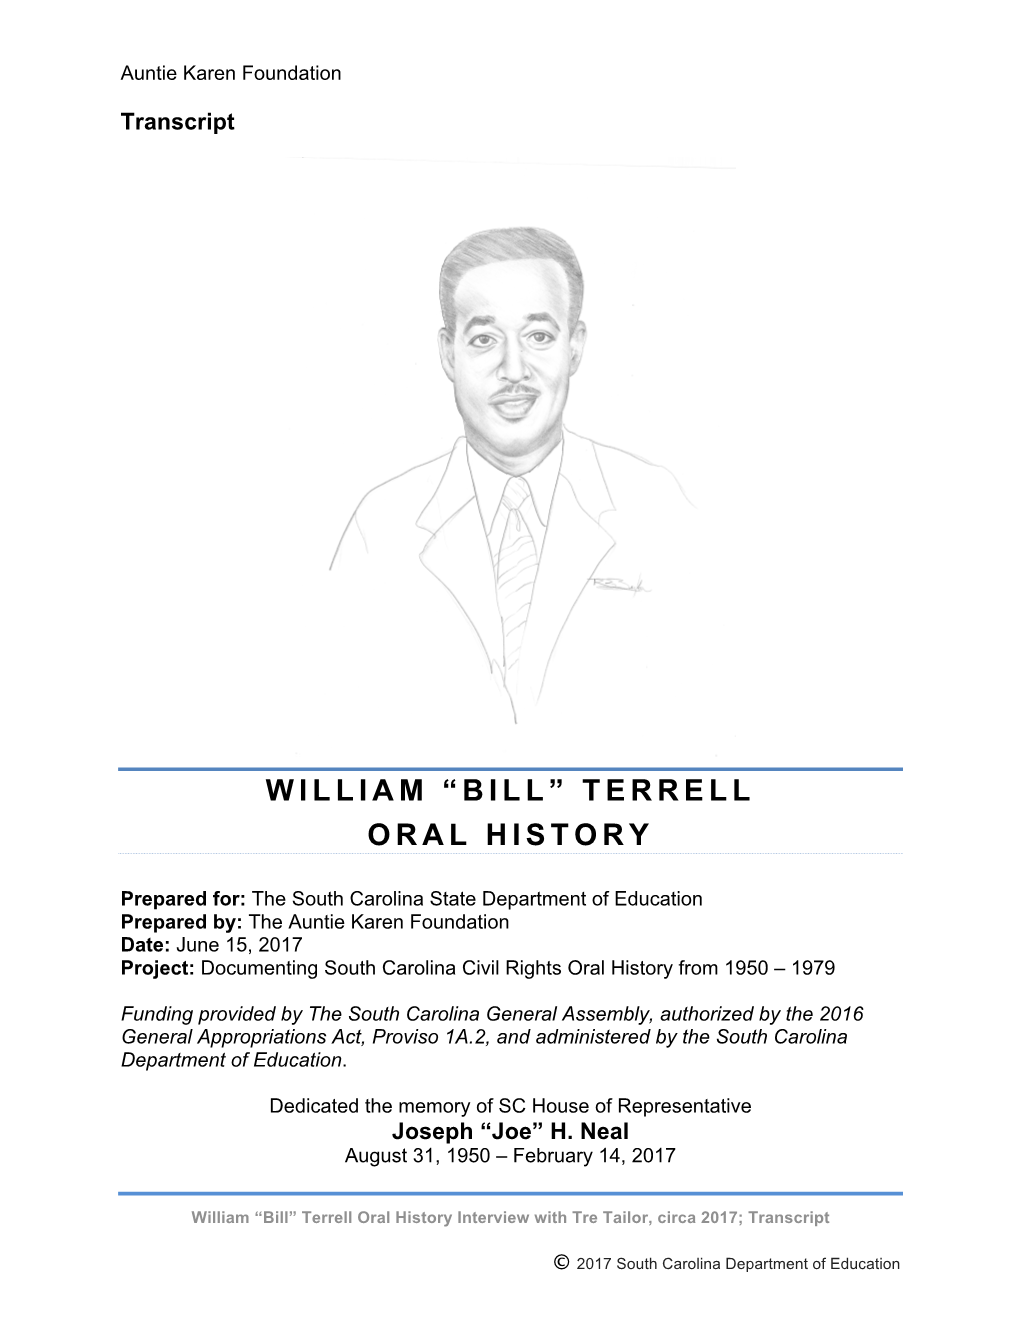 William “Bill” Terrell Oral History